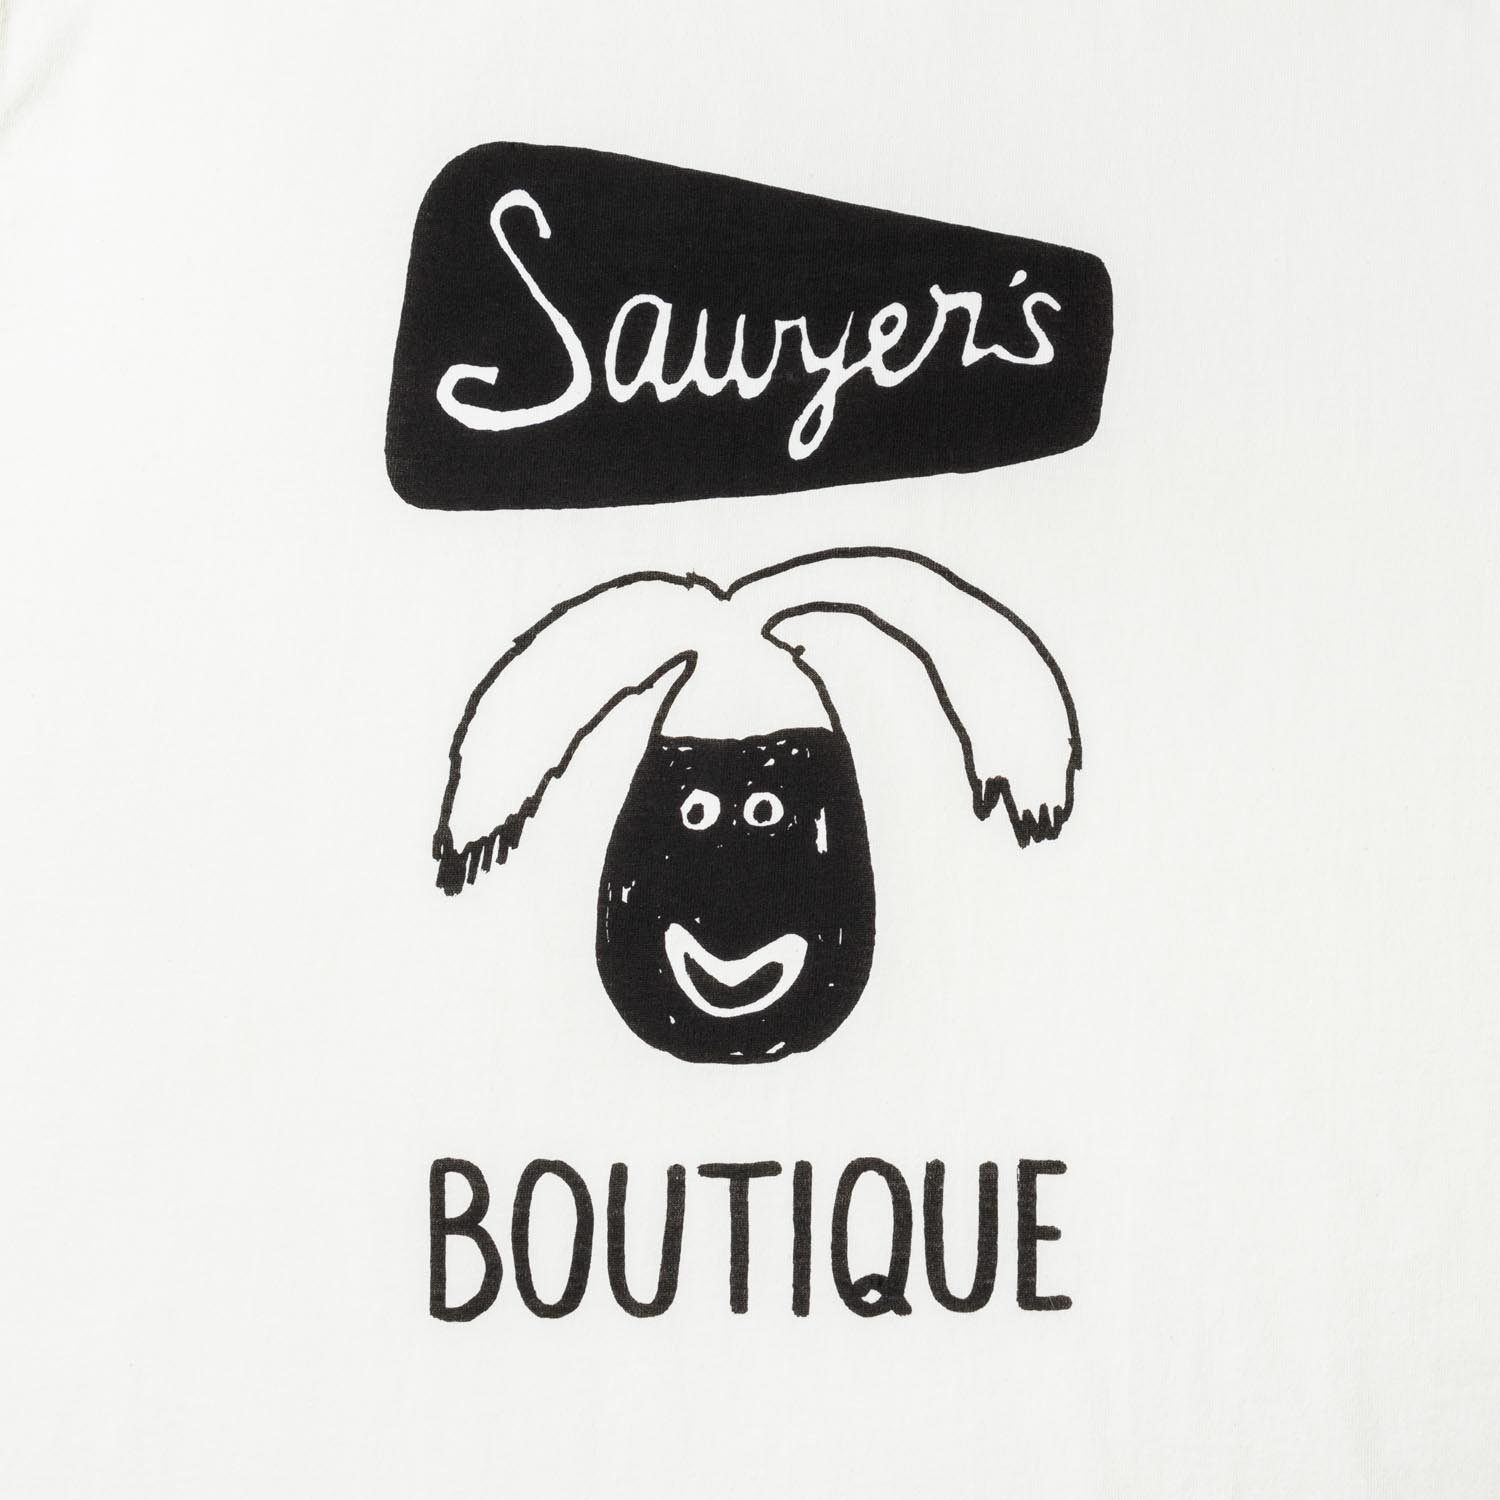 Sawyer’s Boutique designed by Tomoo Gokita